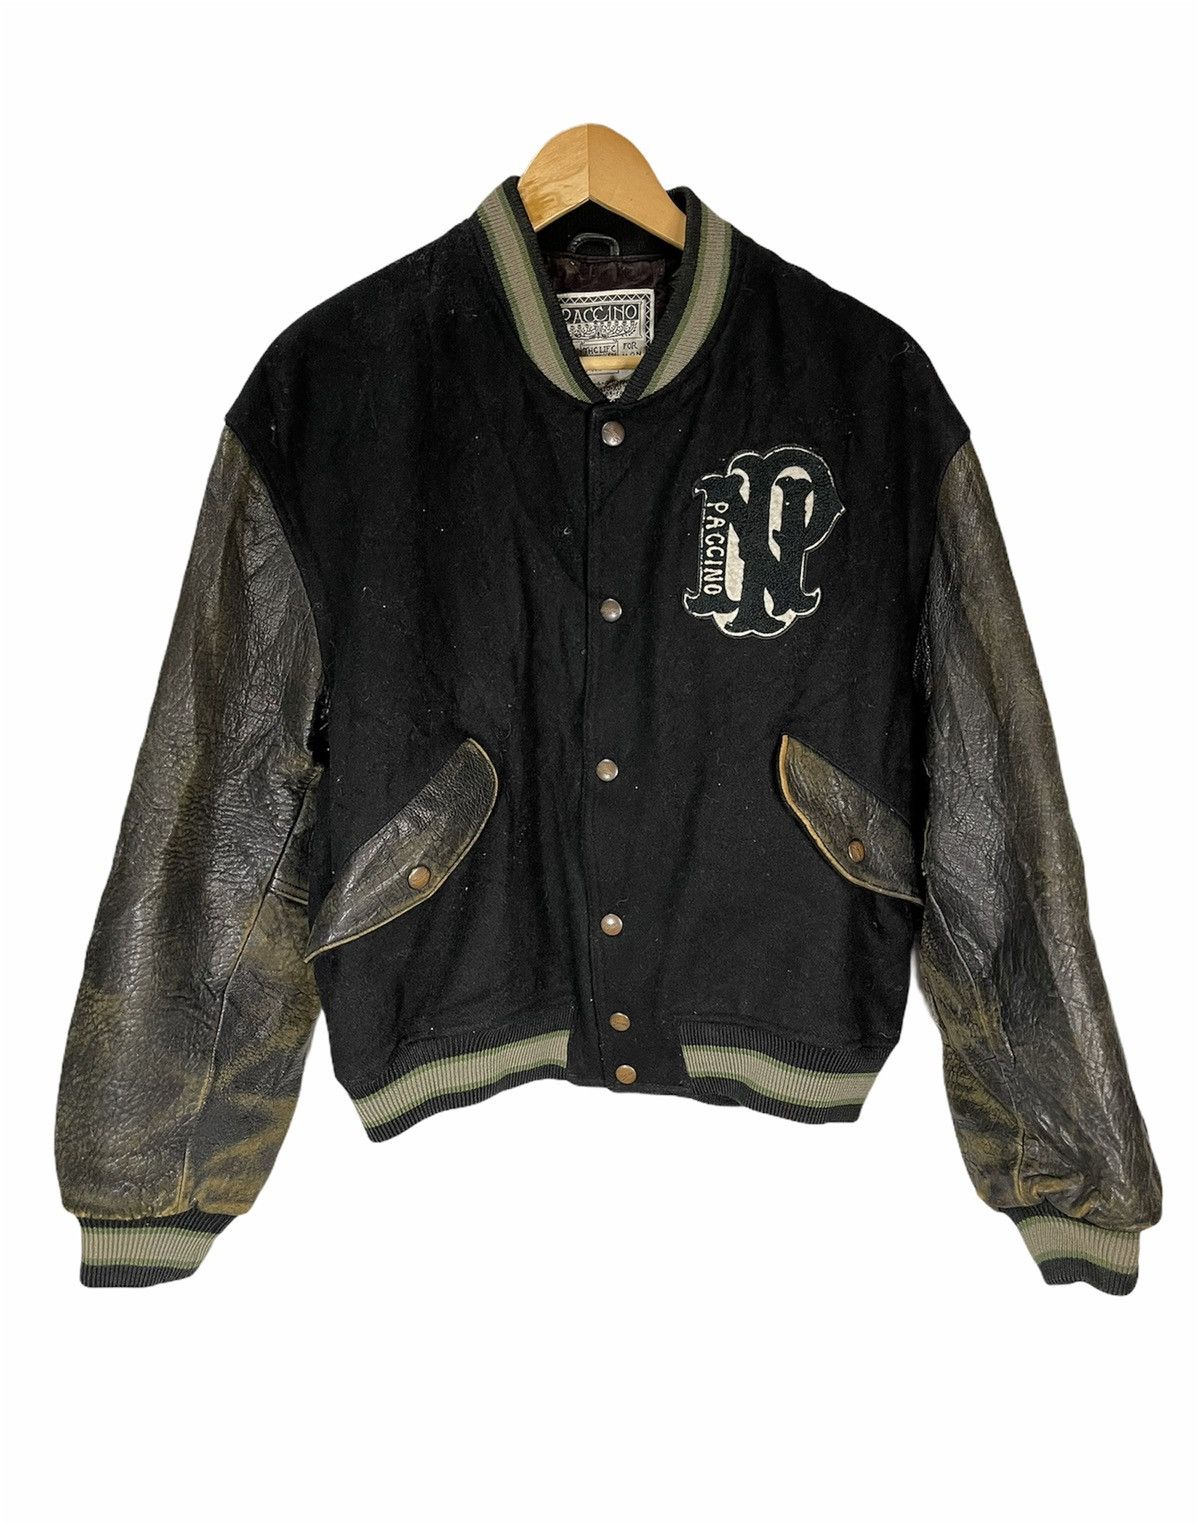 Vintage Vintage Vasity Jacket PACCINO Japanese Brand | Grailed